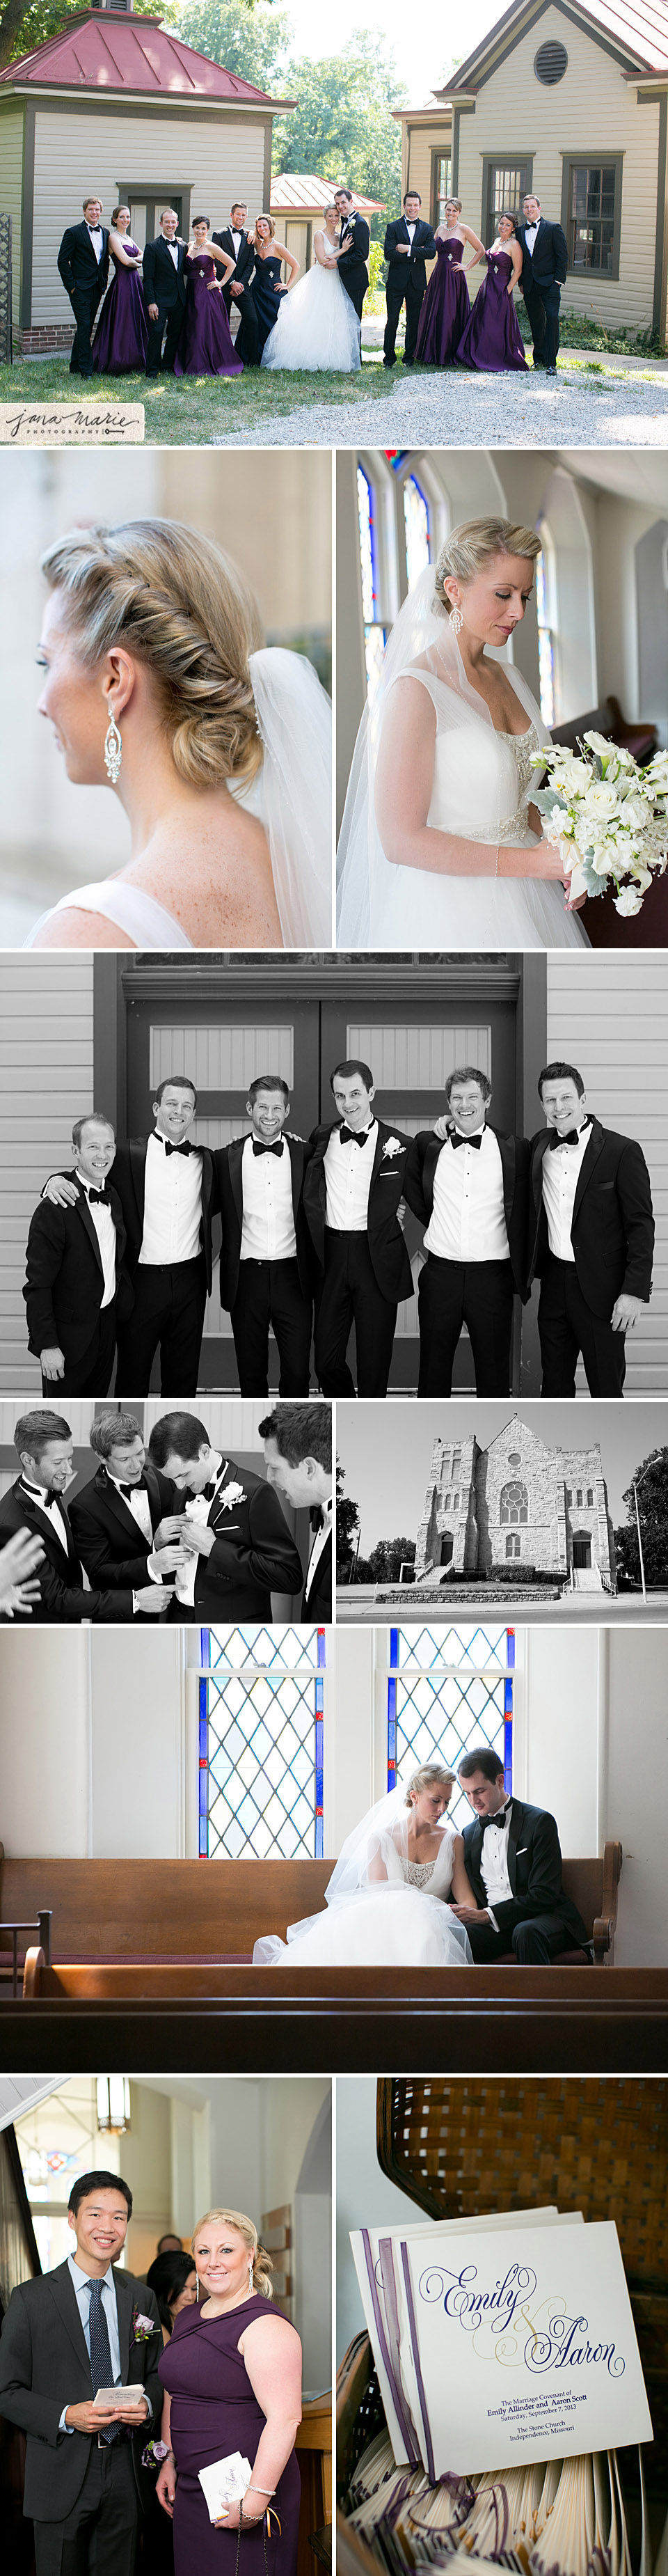 Fun groomsman, Stone Church, Independence weddings, Midwest weddings, Jana Marie Photography